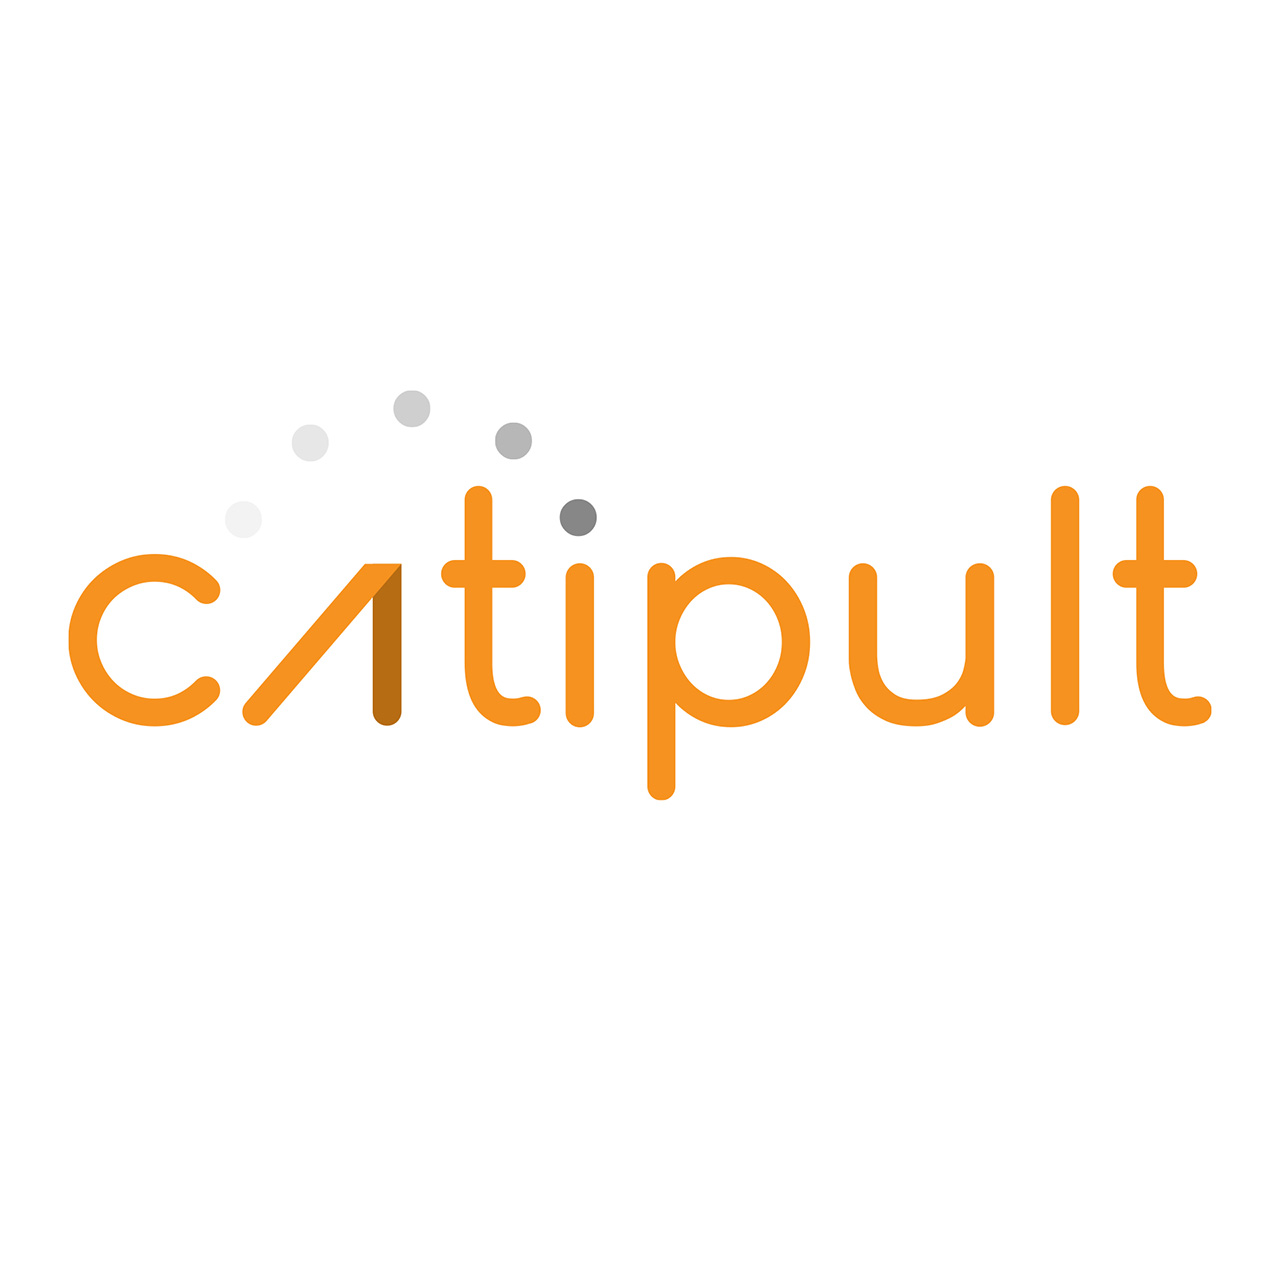 Catipult Mobile Application Logo